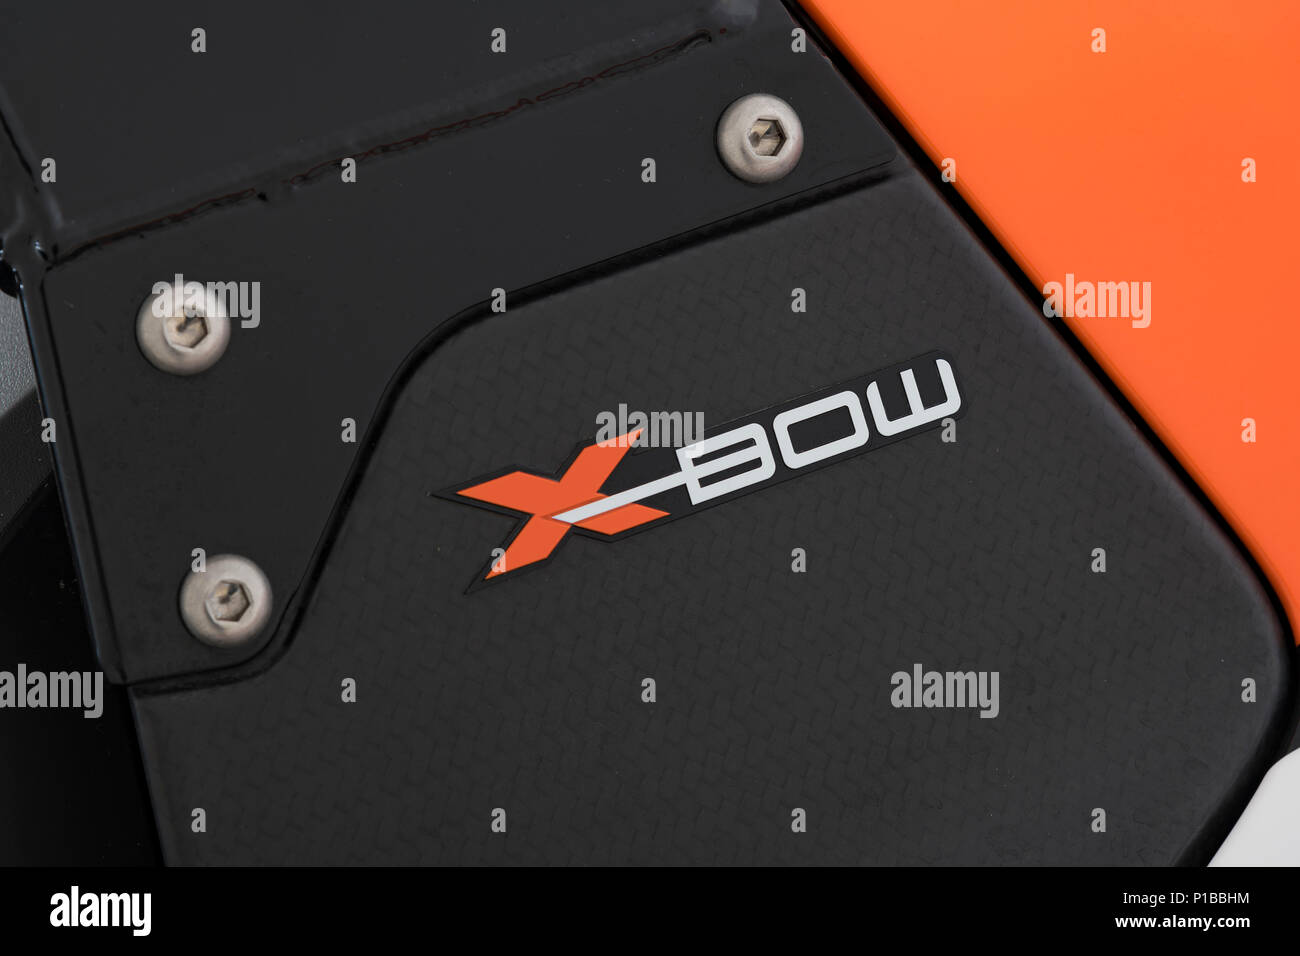 2012 KTM X-Bow Stock Photo